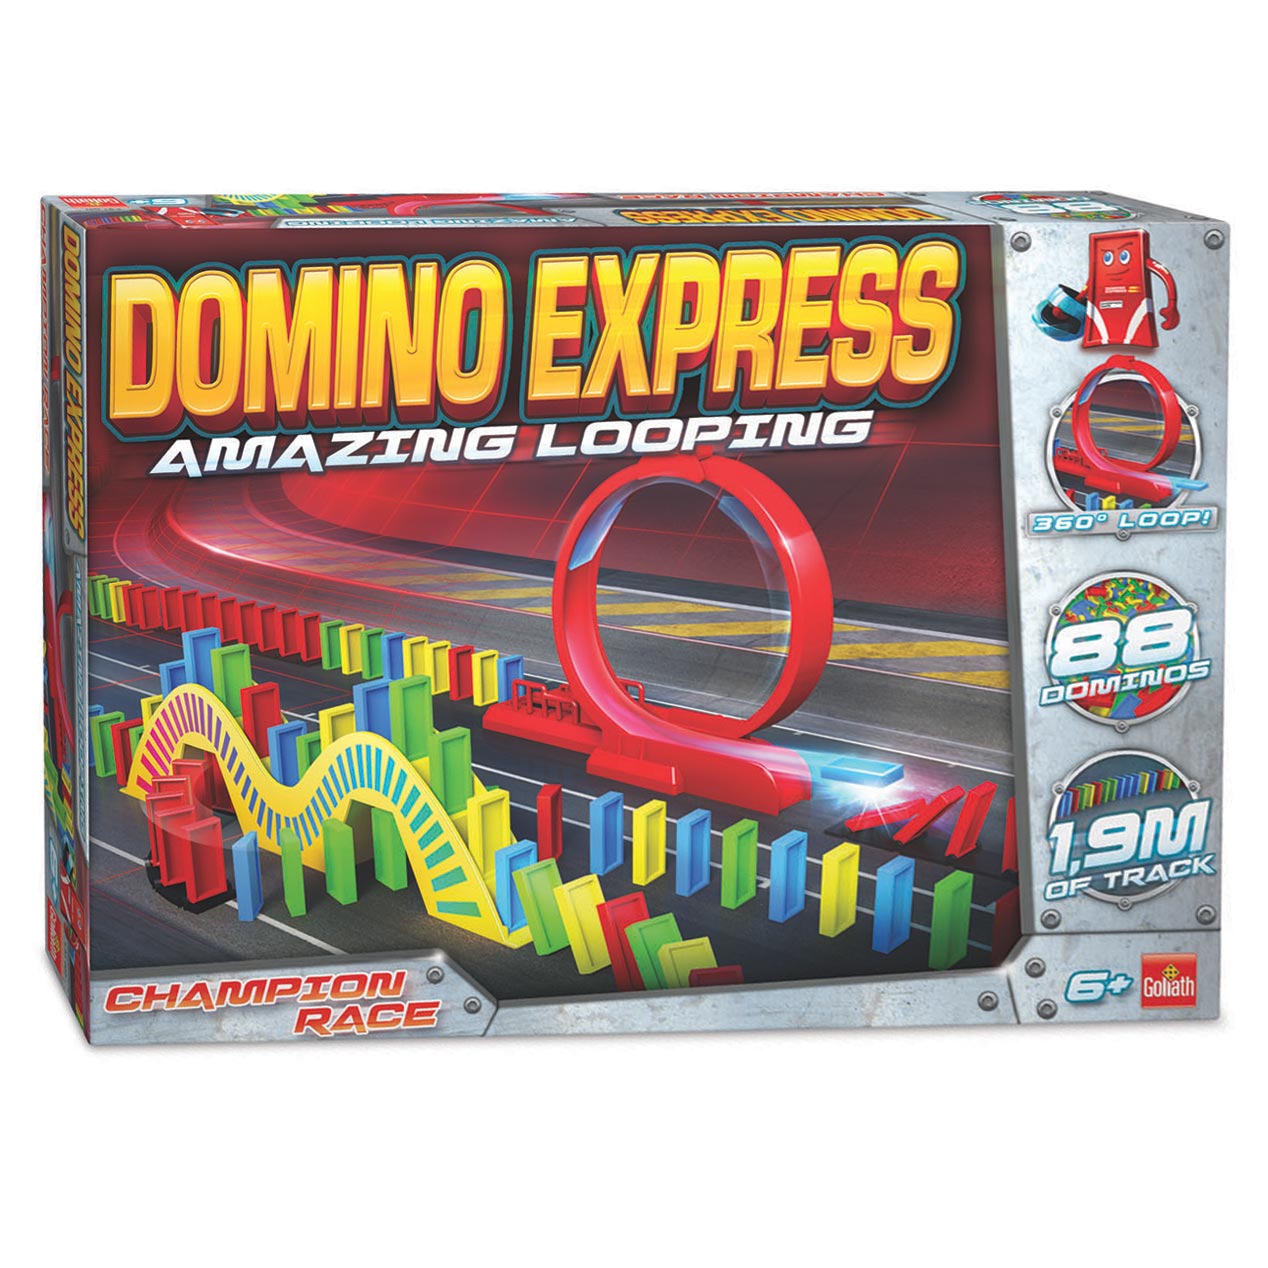 Domino Express Express Express Amazing Looping Top Merken Winkel